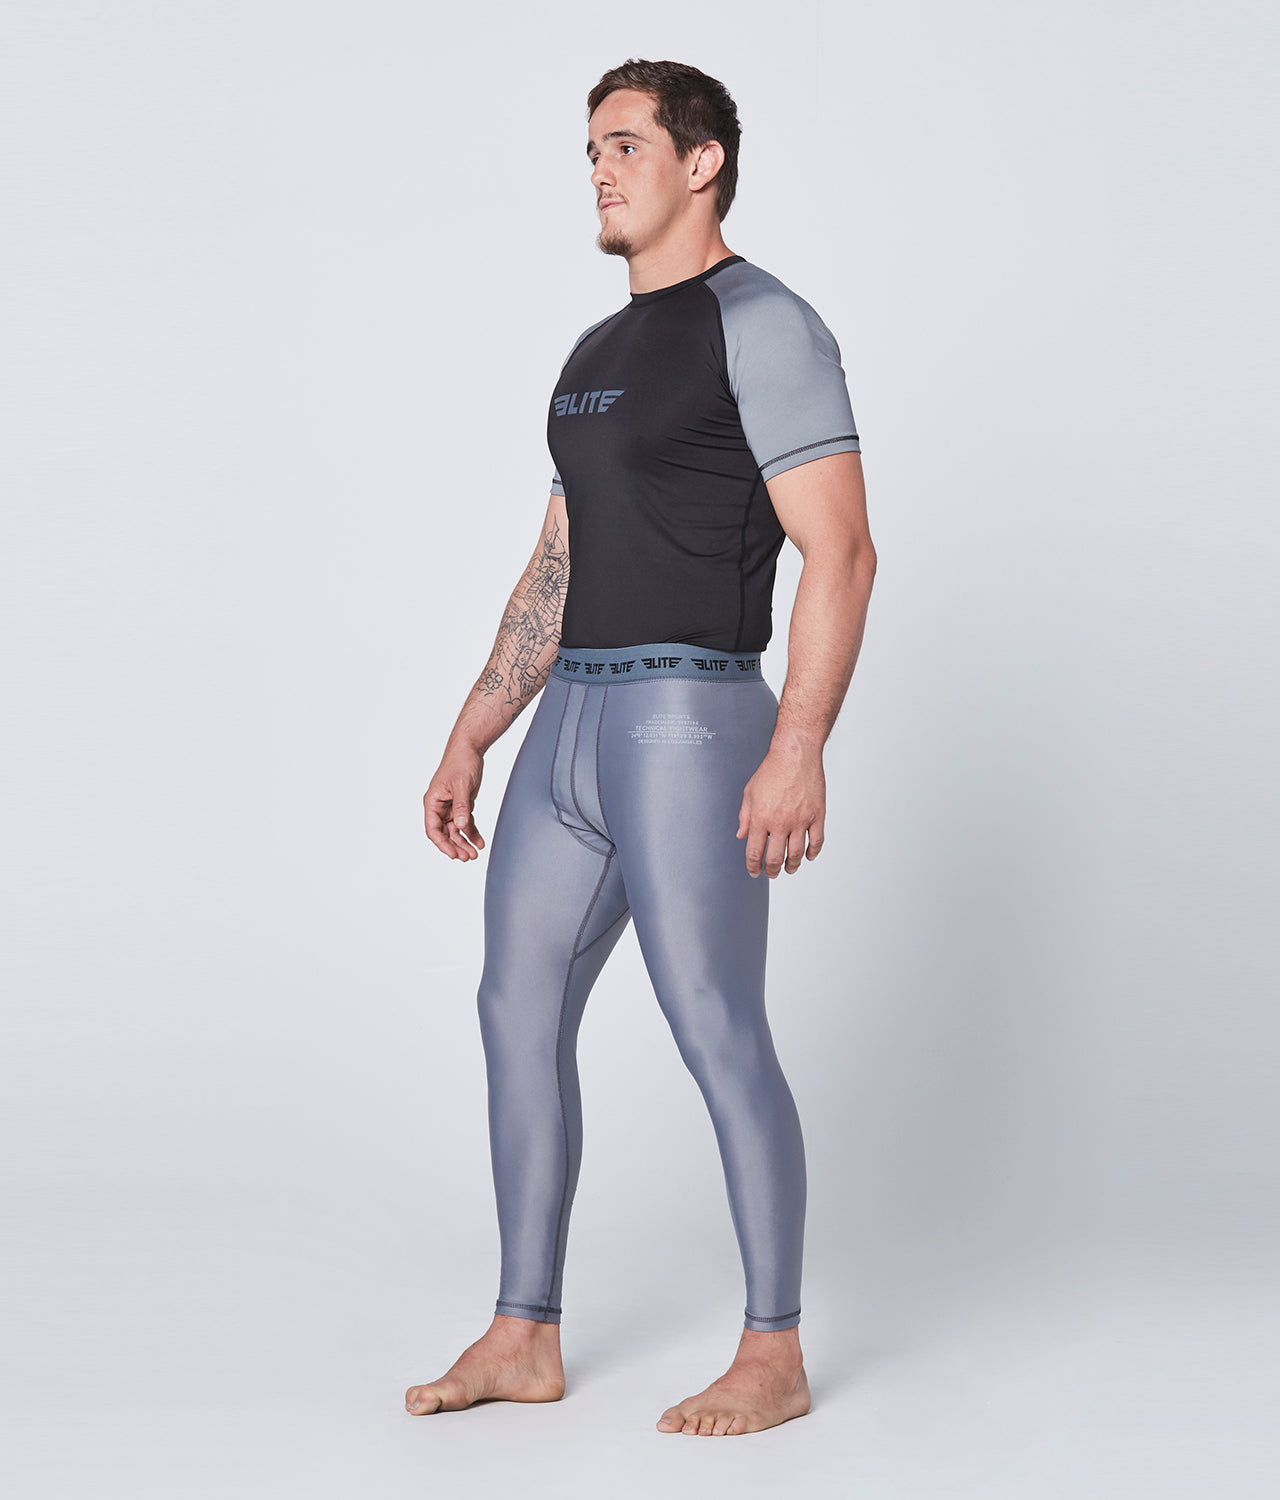 Men's Plain Gray Compression Wrestling Spat Pants